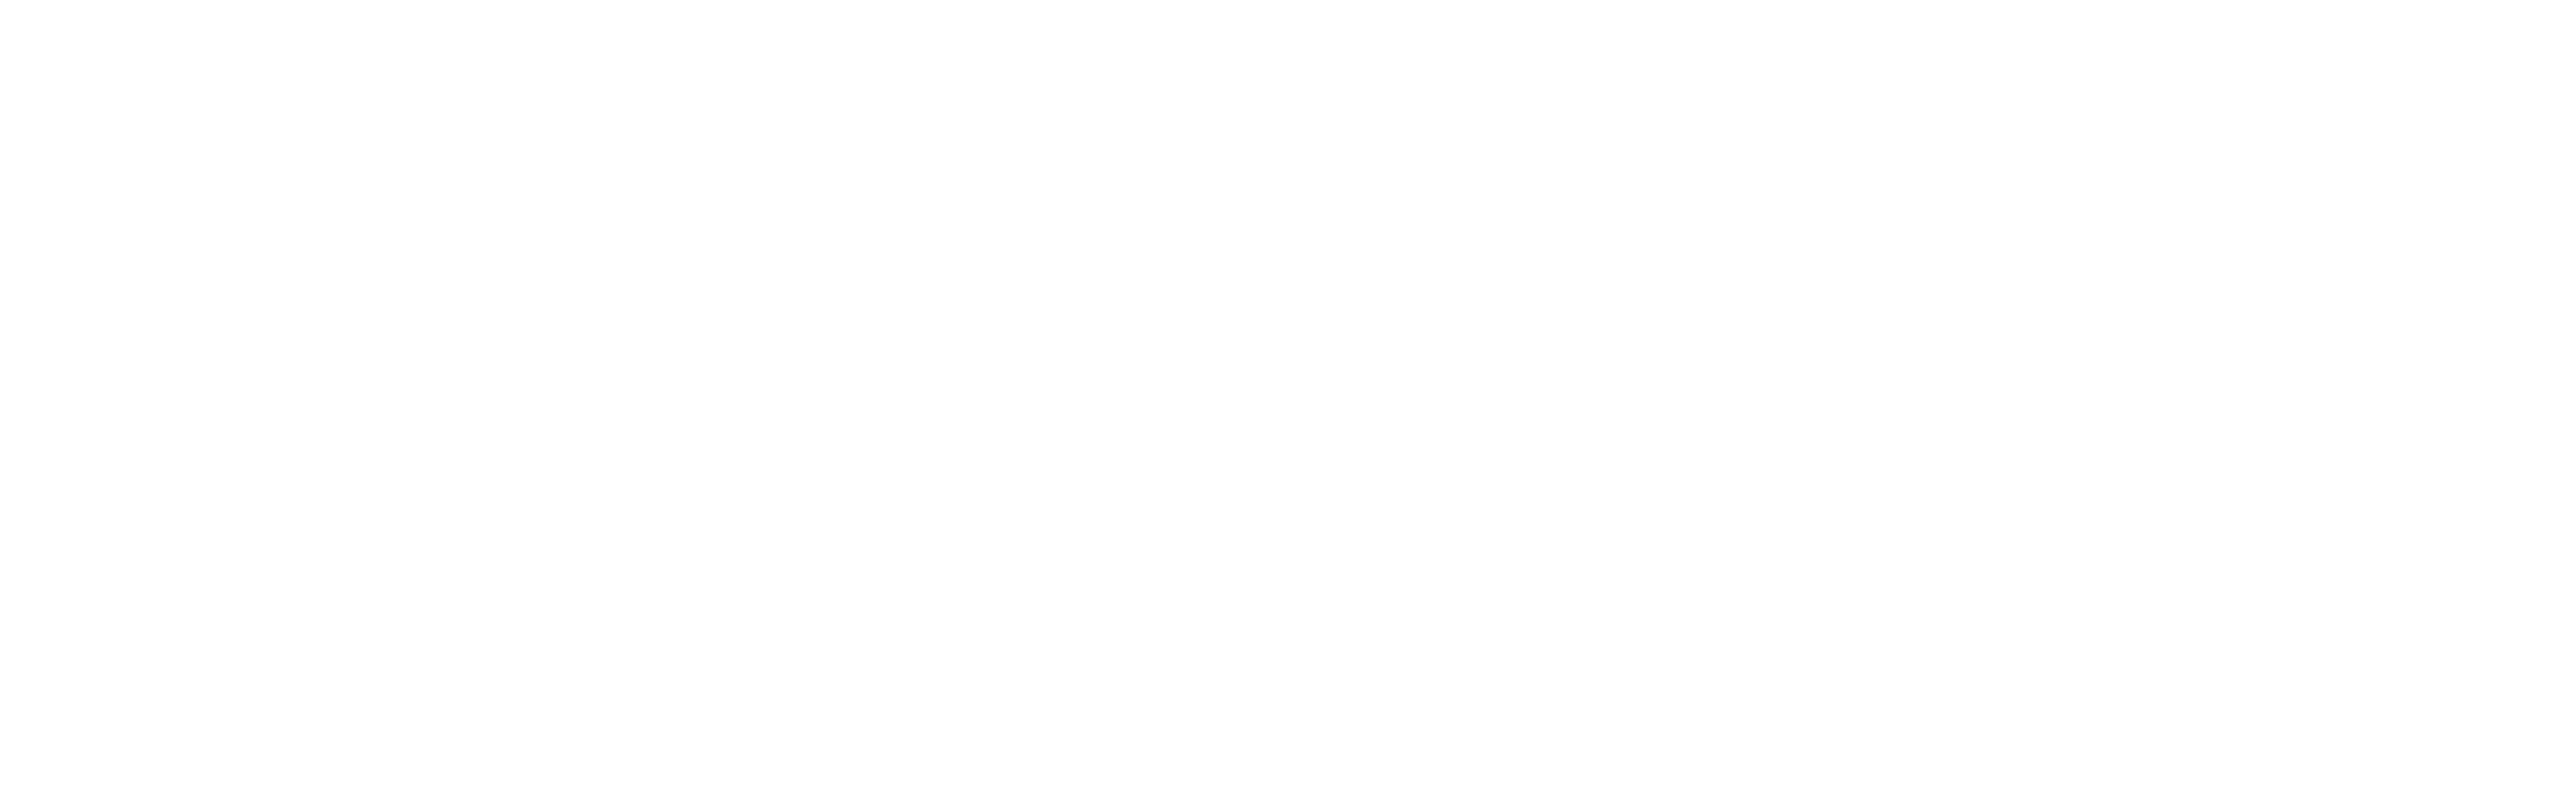 Angular wordmark white logo